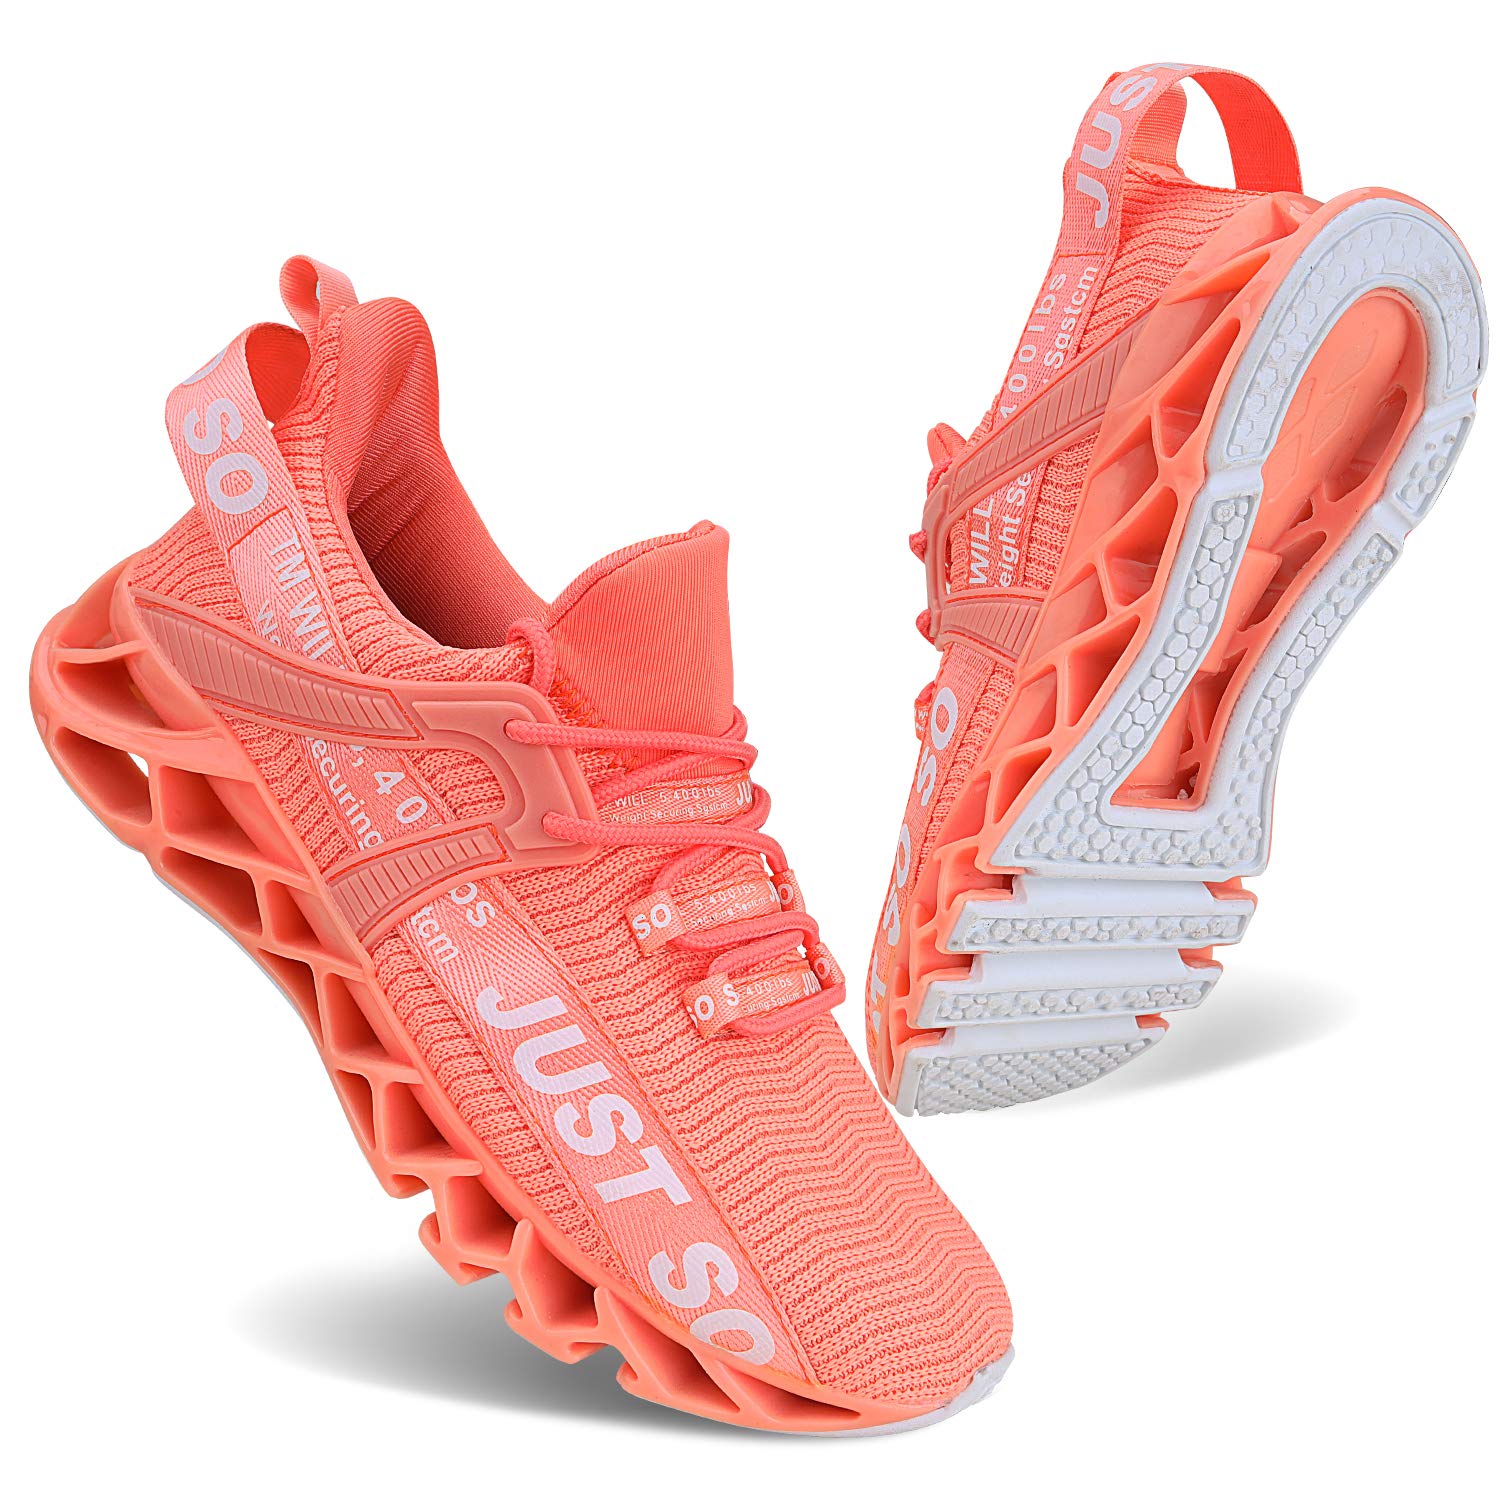 UMYOGO Women's Running Shoes Non Slip Athletic Tennis Walking Blade Type Sneakers